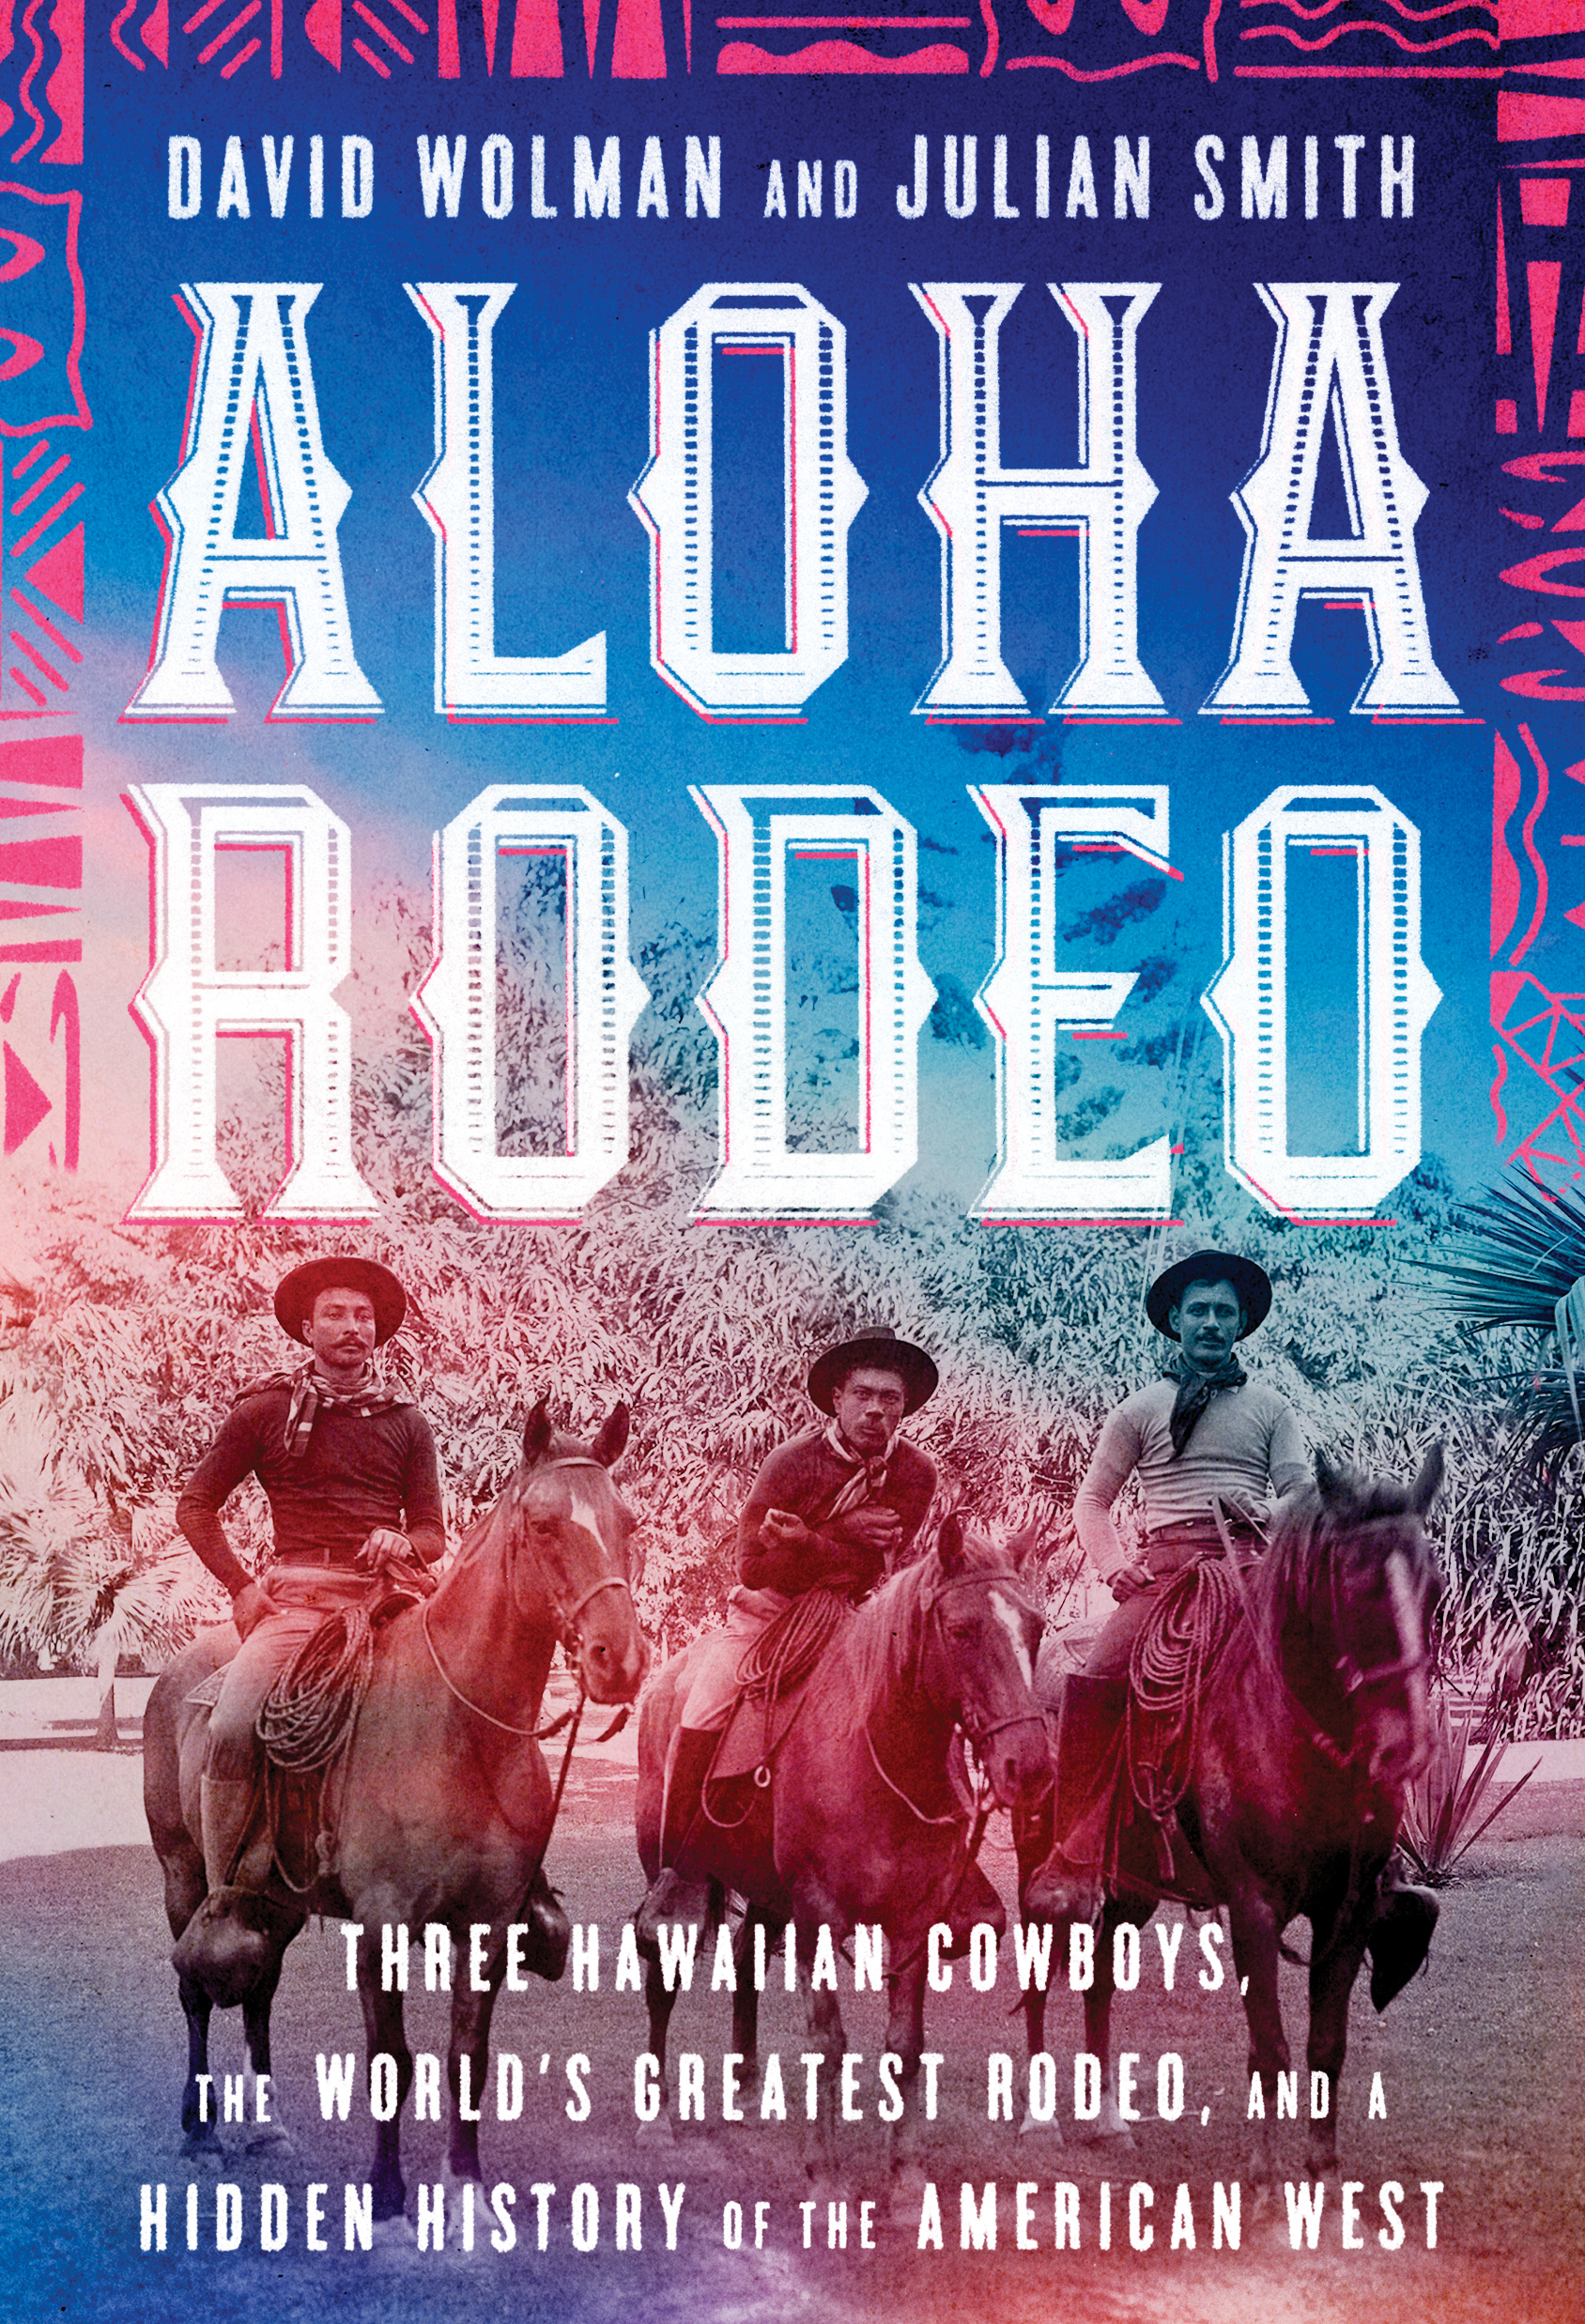 Alum David Wolman writes about Hawaiian cowboys